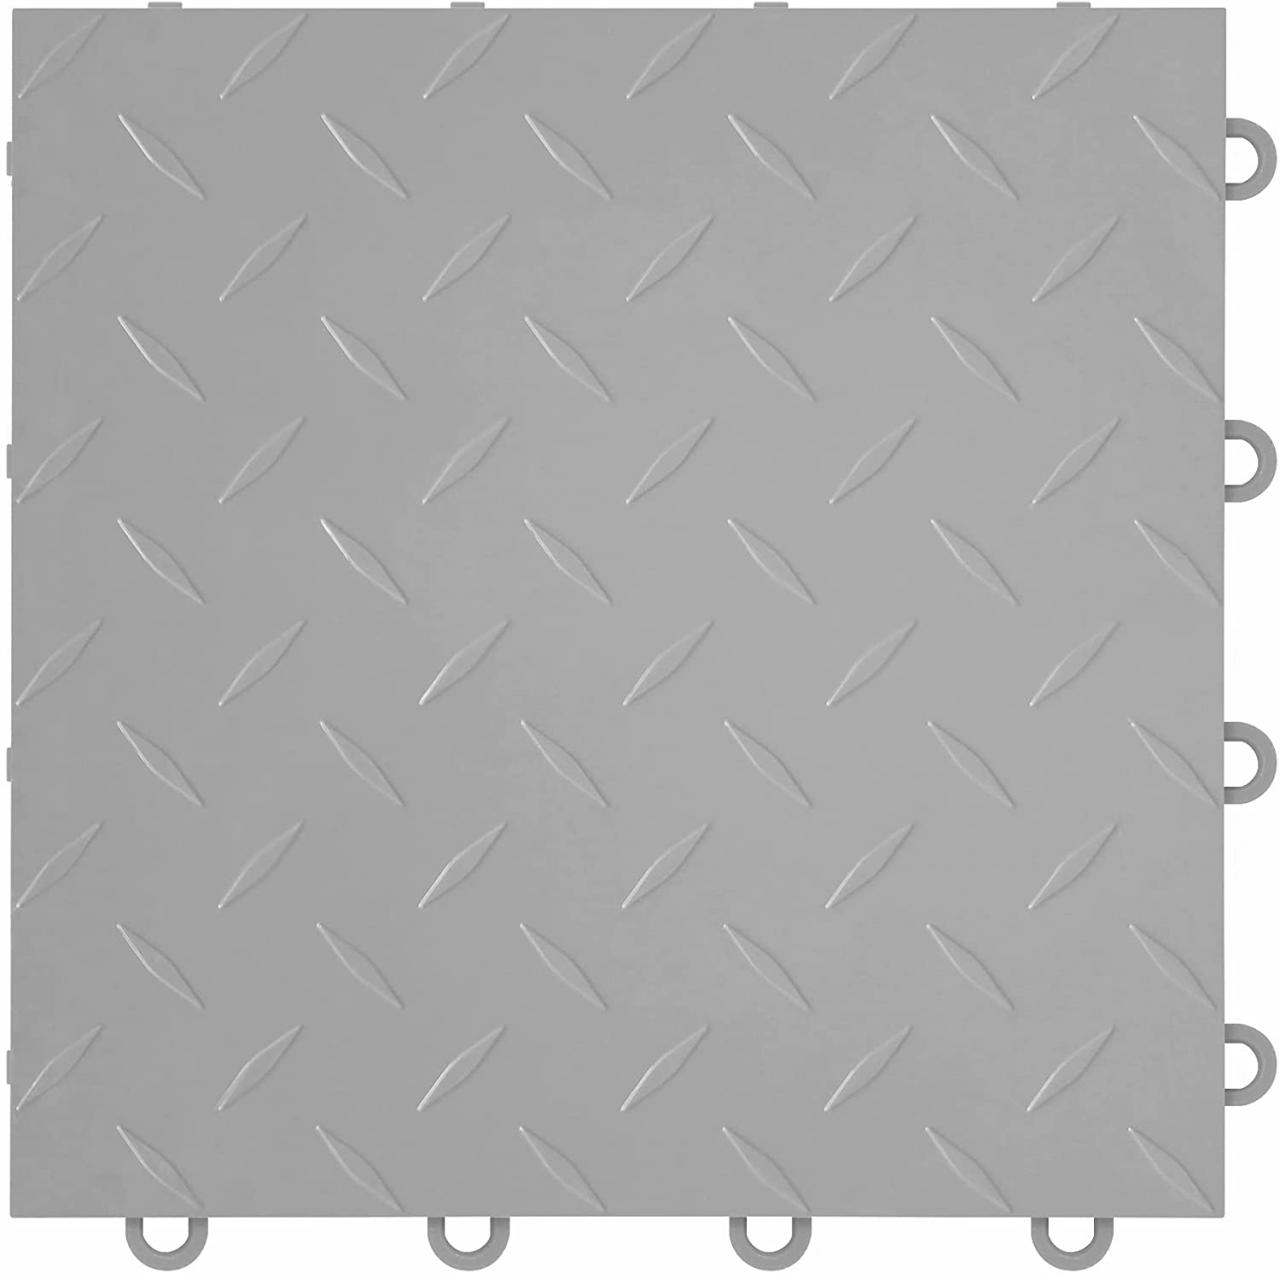 Buy IncStores ⅜ Inch Thick Nitro Interlocking Garage Floor Tiles | Plastic Floor  Tiles for a Stronger and Safer Garage, Workshop, Shed, or Trailer | 12”x12”  Tiles, Diamond, Gunmetal, Pack of 52